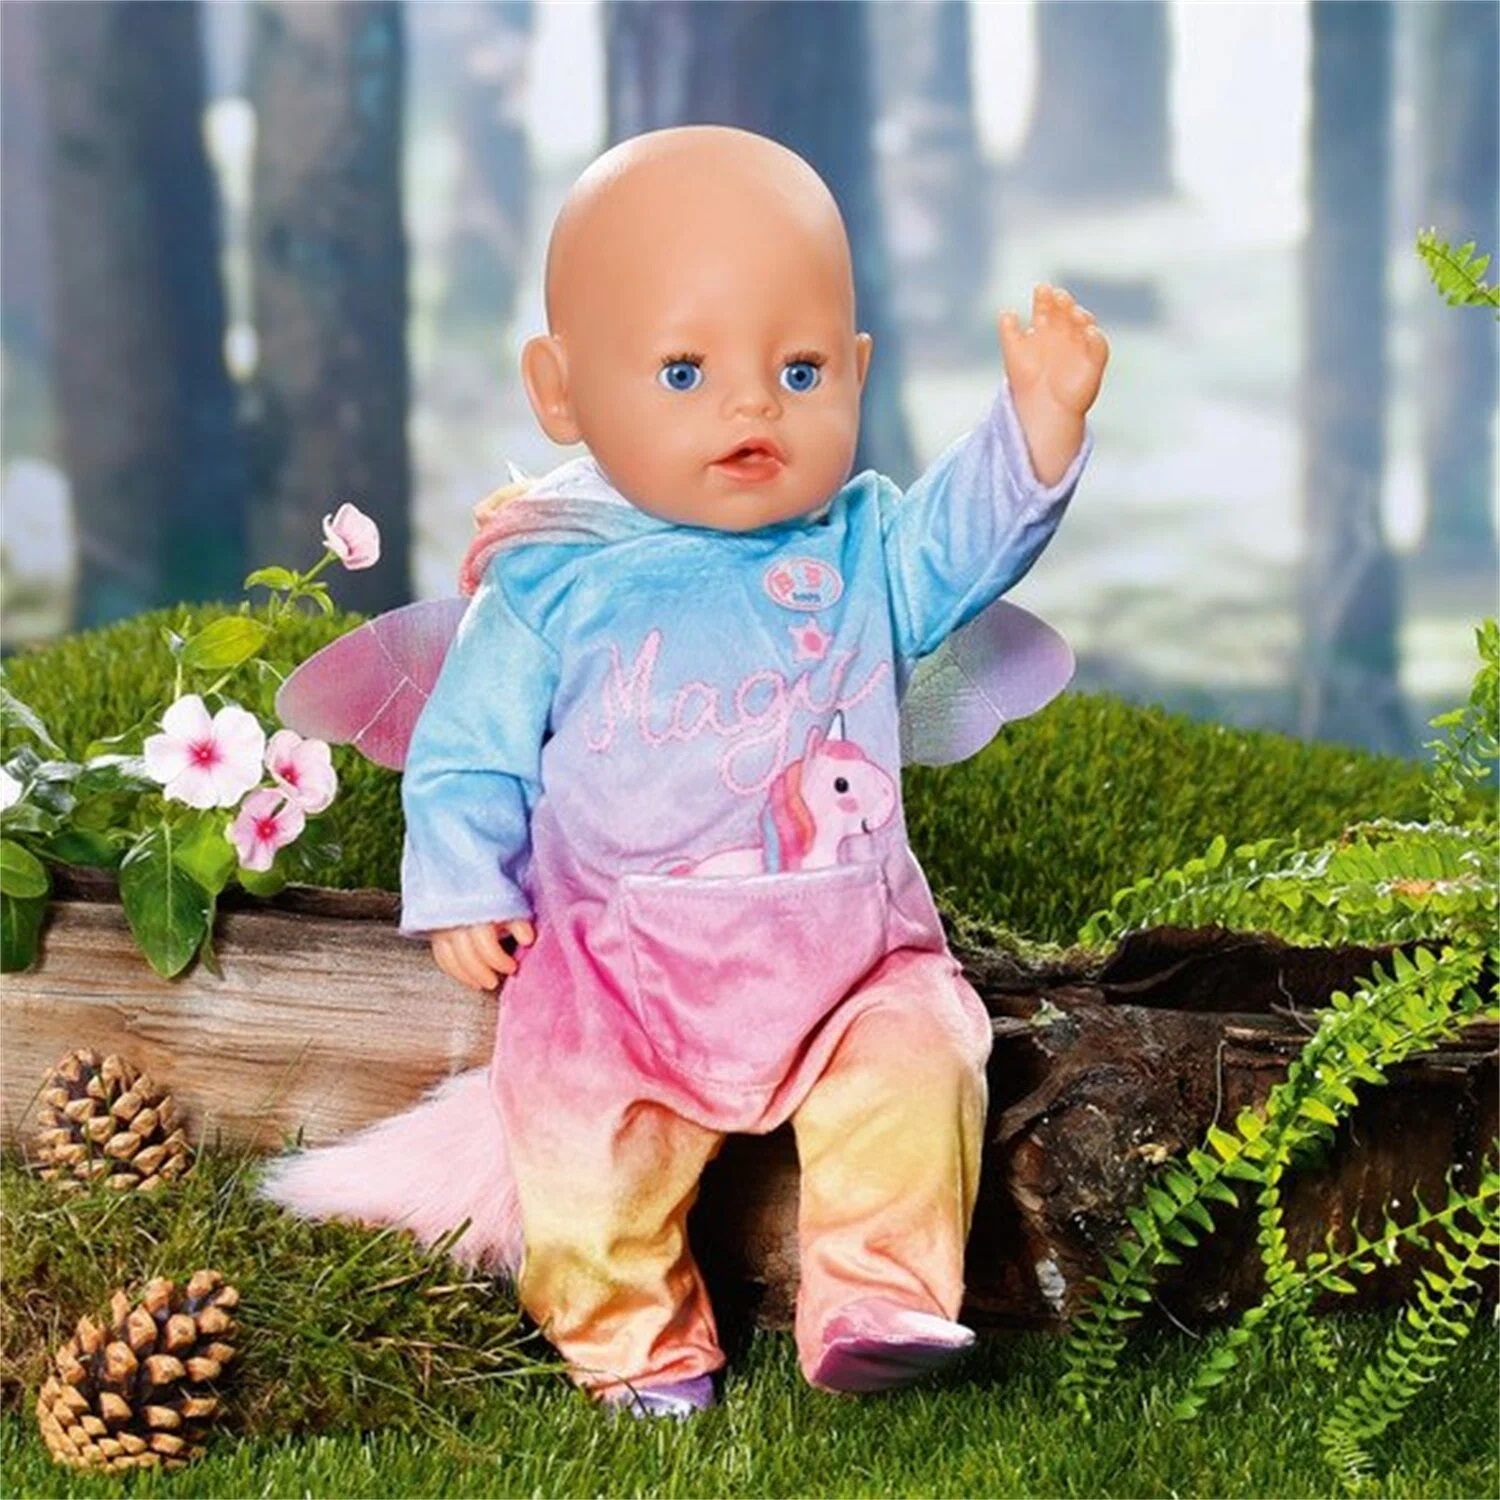 Одежда Zapf Creation Baby Born 828-205 Бэби Борн Нарядный Единорог, 43 см